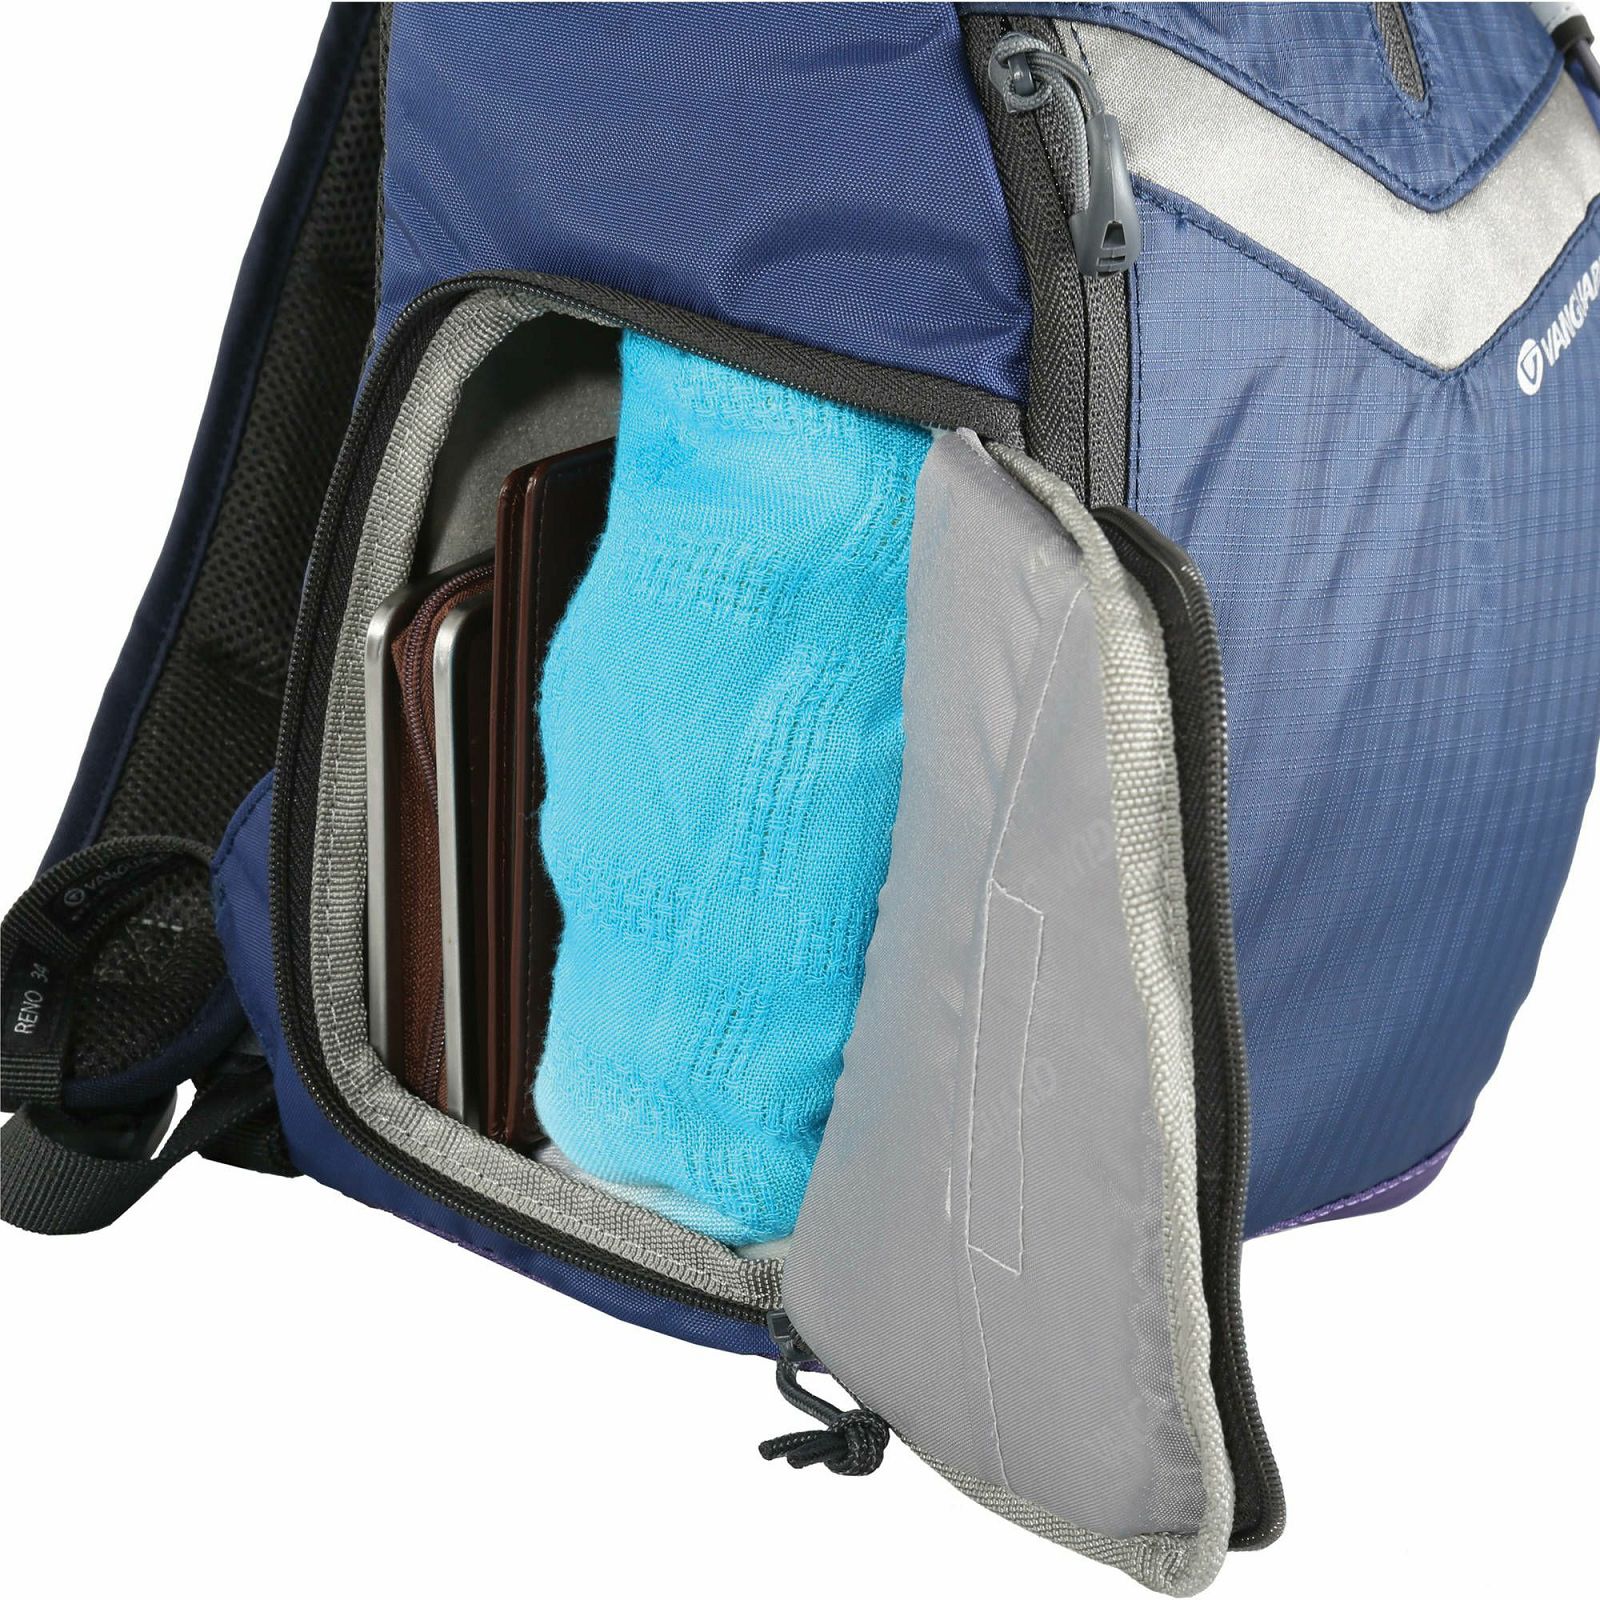 Vanguard Reno 34BL DSLR Sling Bag (Blue) fotografska foto torba